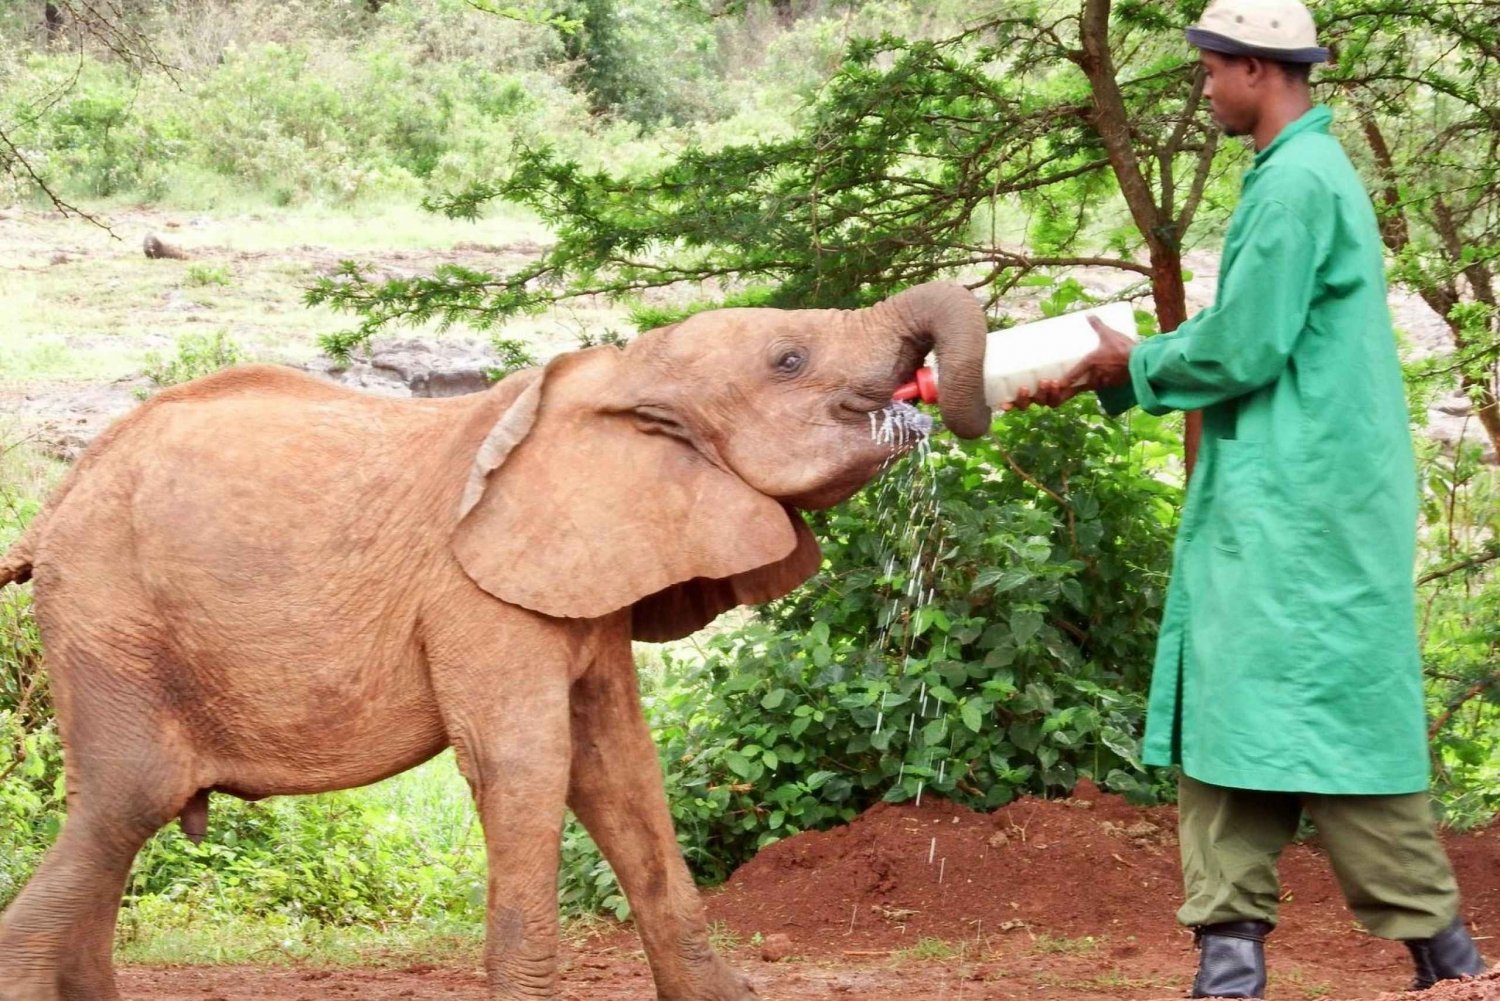 Nairóbi: Excursão ao Orfanato de Elefantes e ao Centro de Girafas